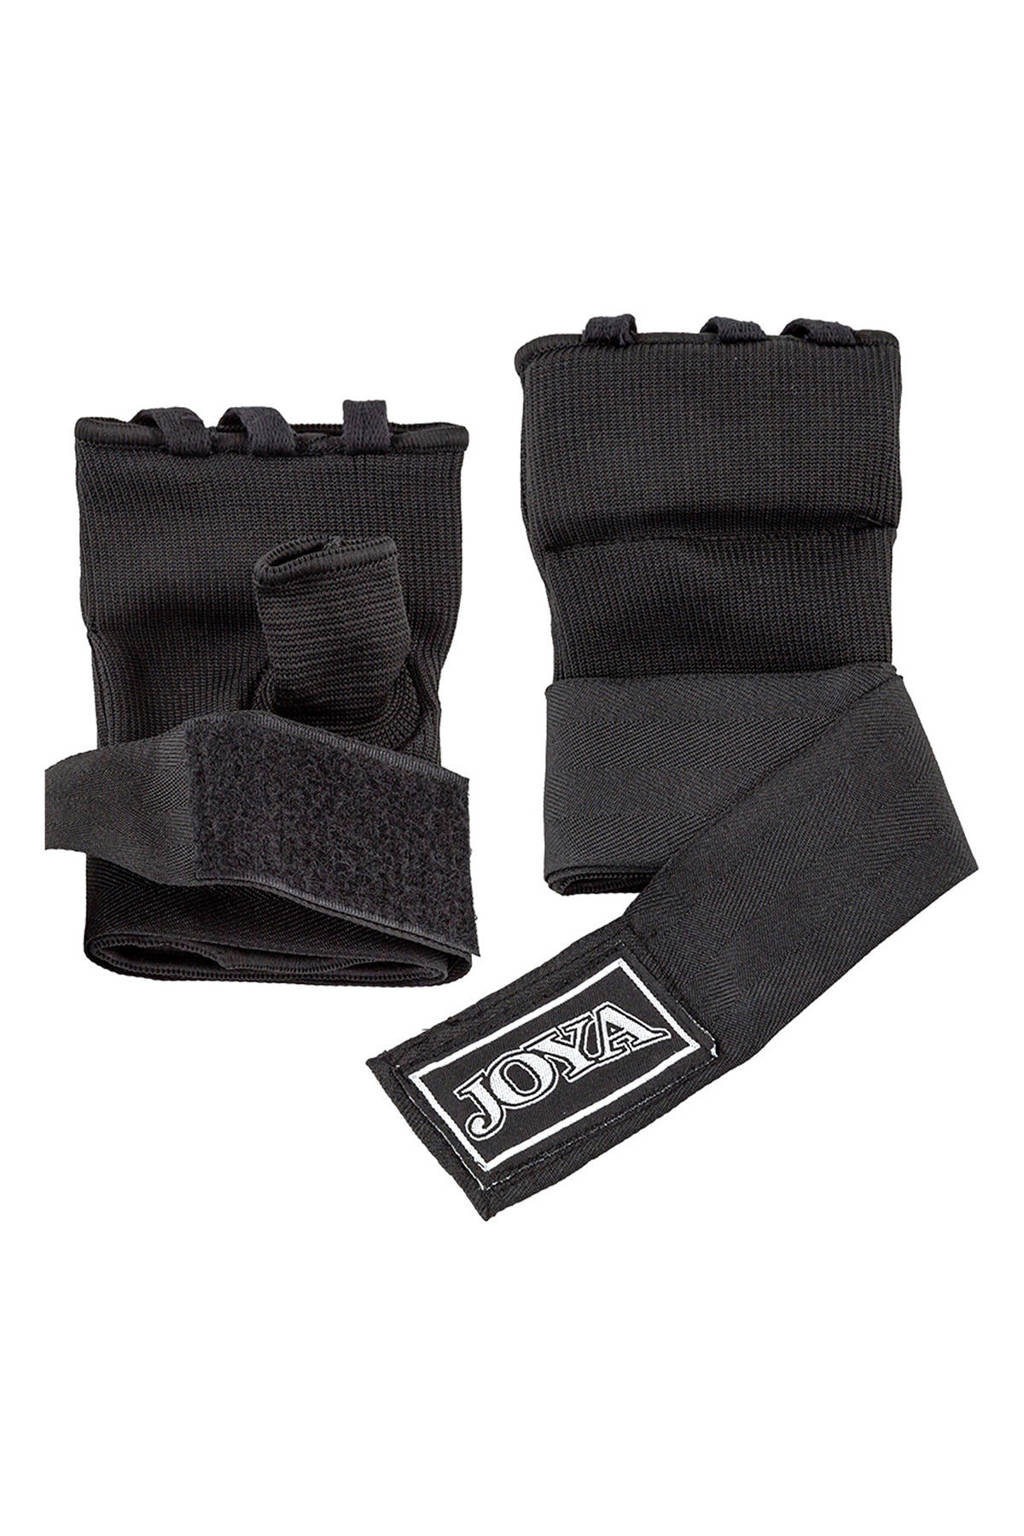 Joya Senior  boks binnenhandschoenen zwart